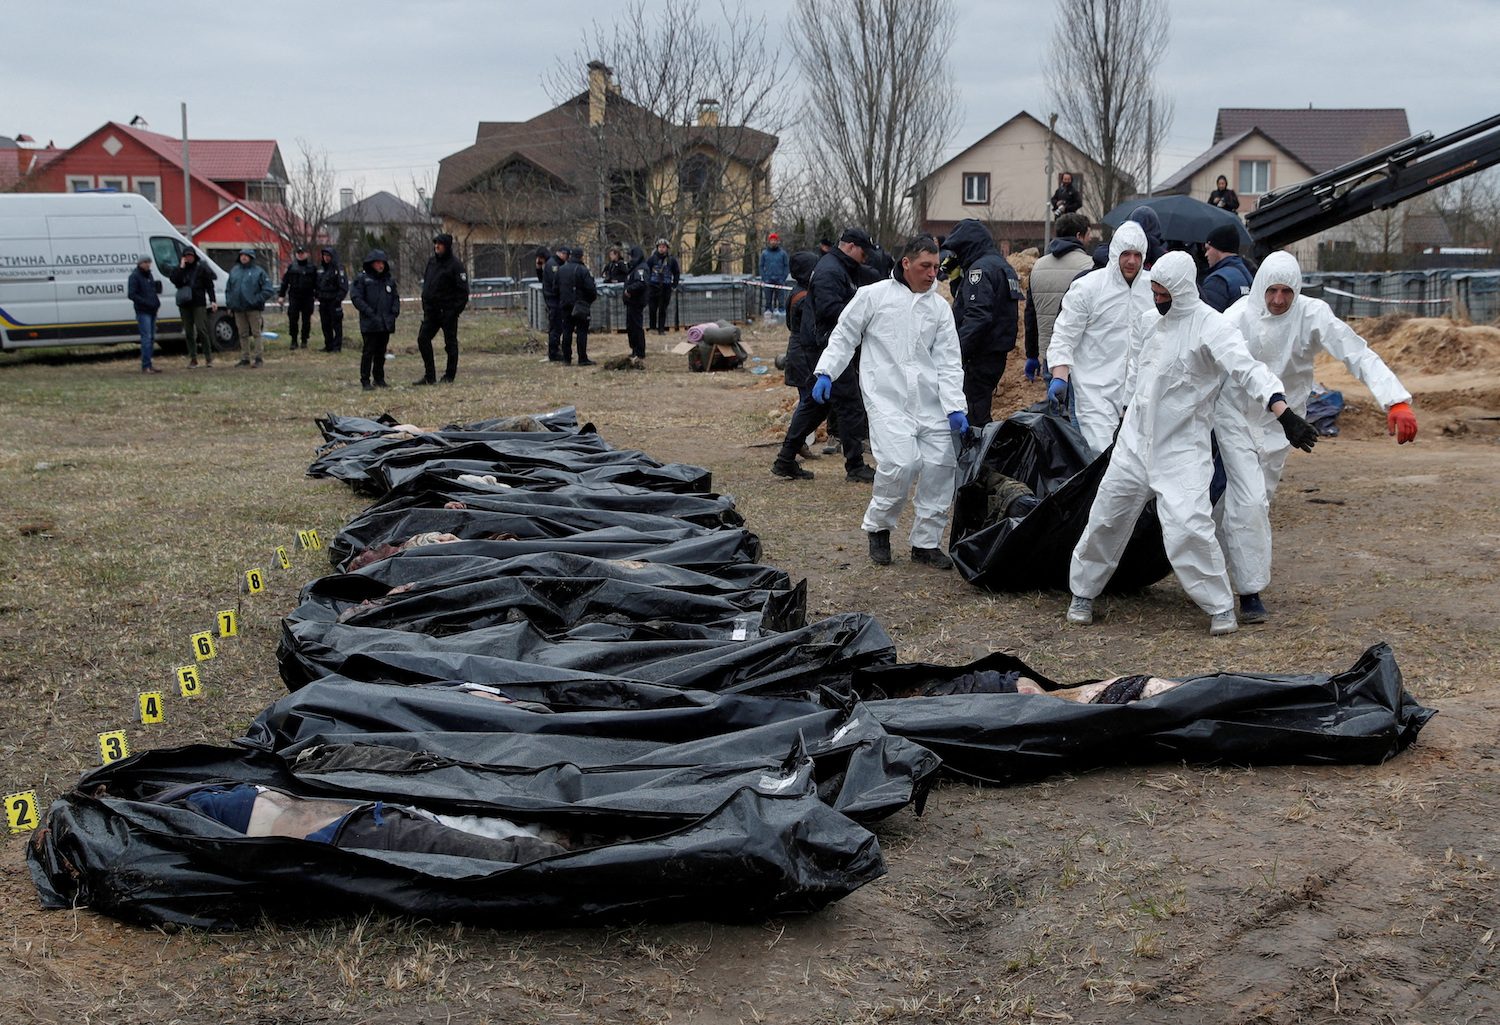 Germany has evidence of war crimes in Ukraine ‘in 3-digit range’ – prosecutor